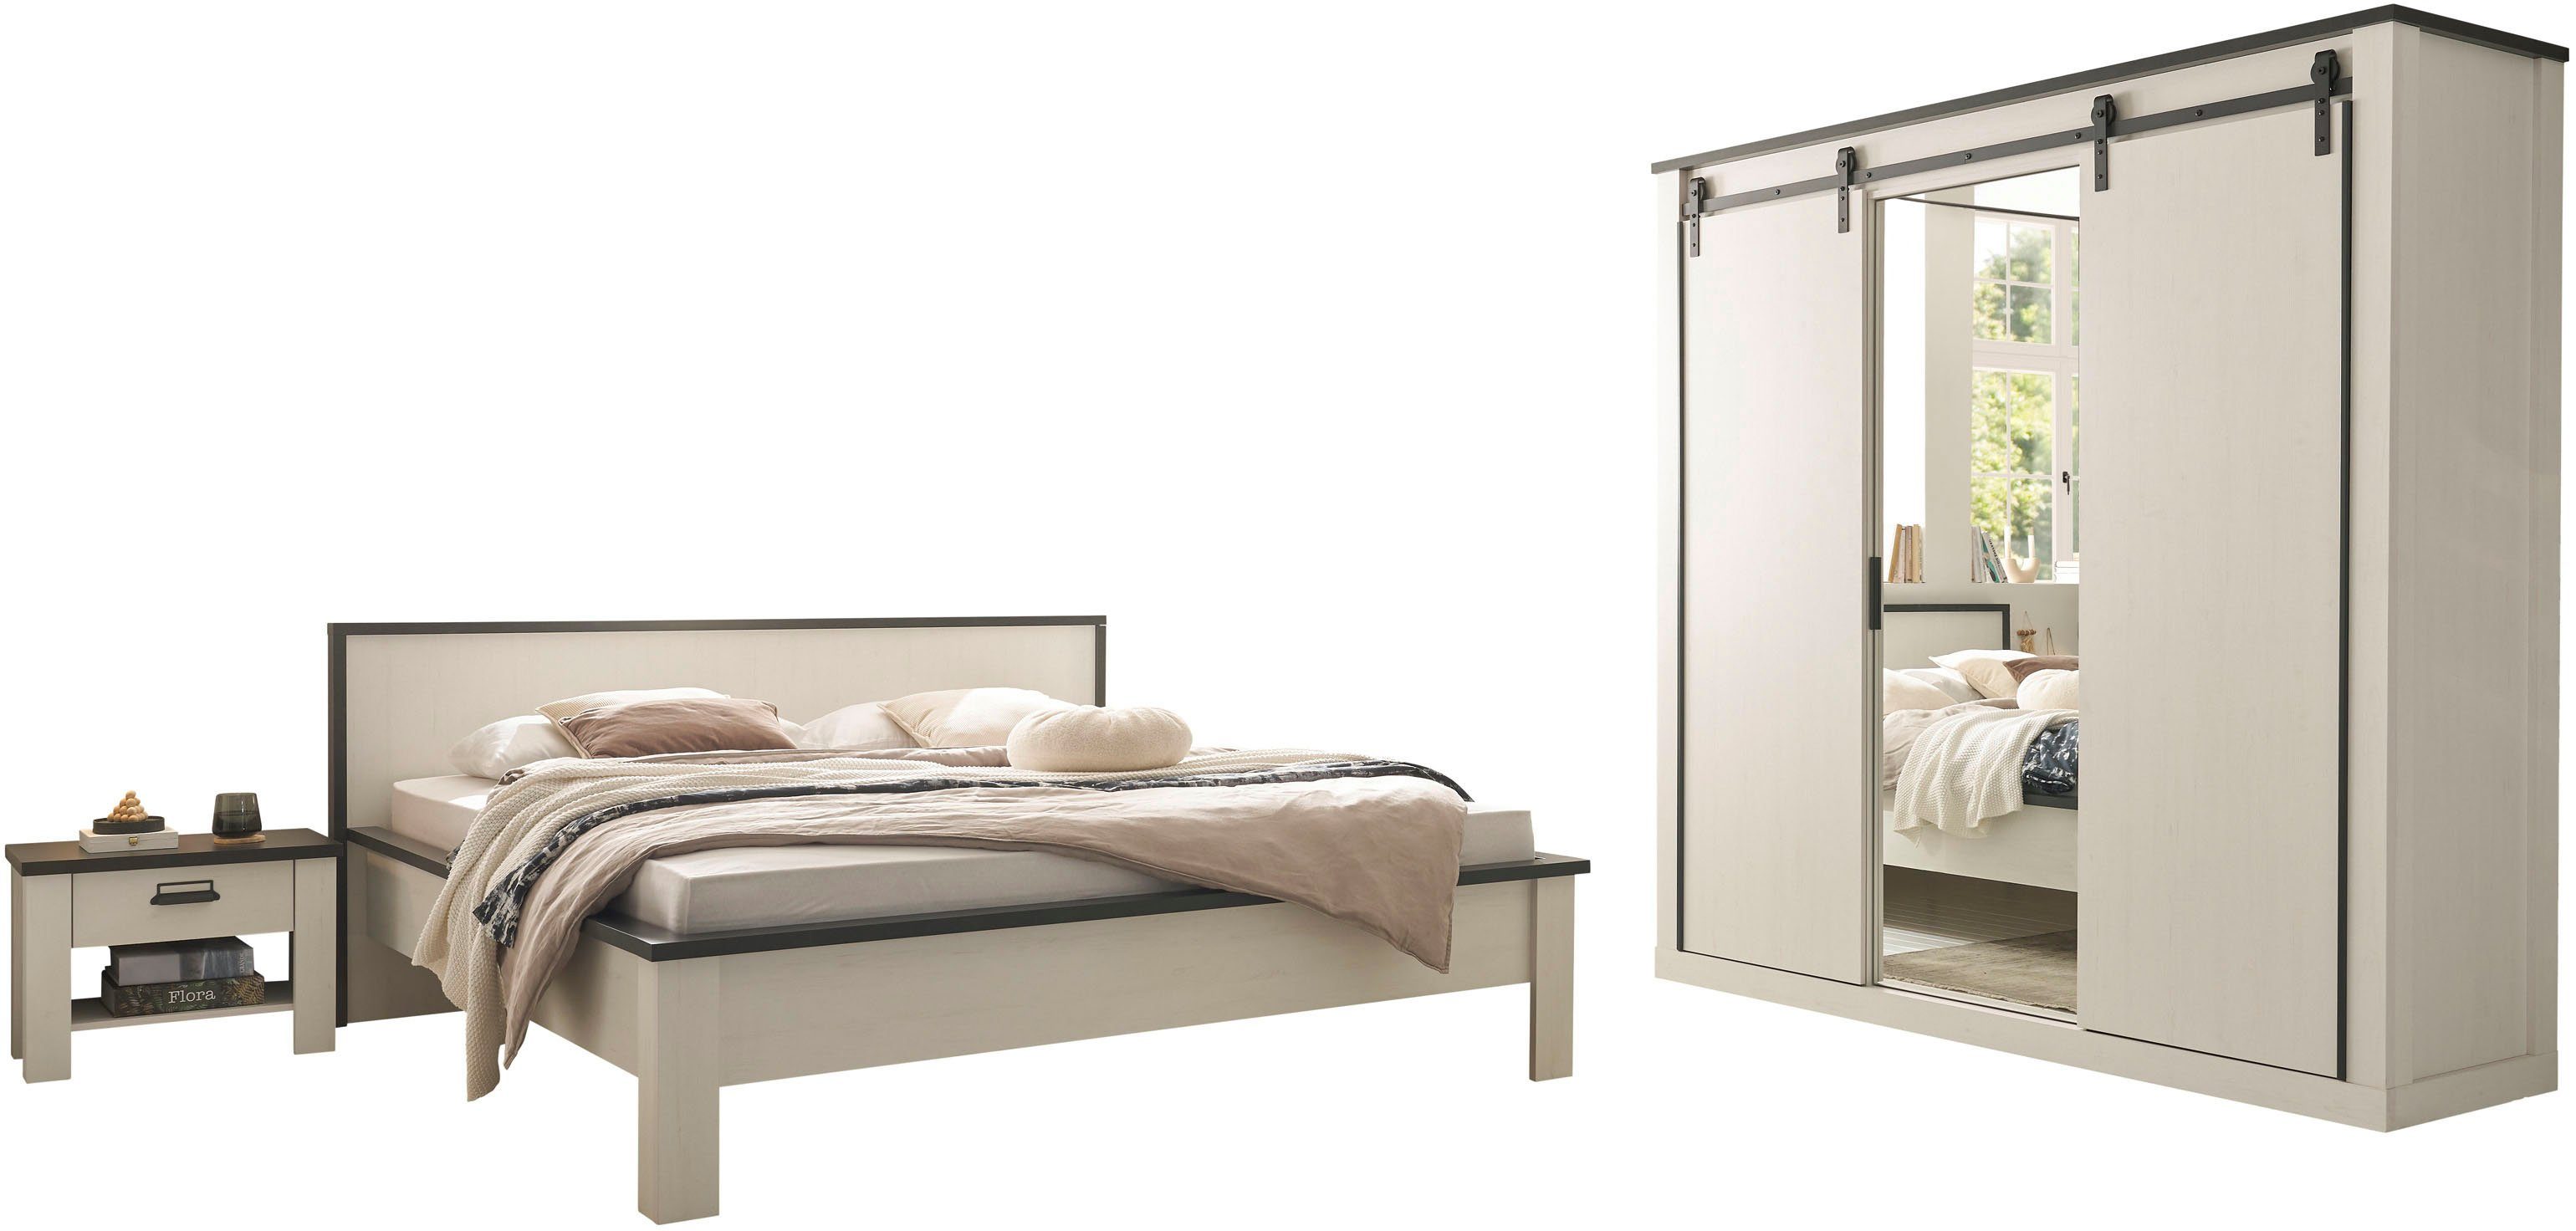 home affaire slaapkamerserie sherwood ligoppervlak 180 x 200 cm, kast 3-deurs 201 cm breed (4-delig) wit